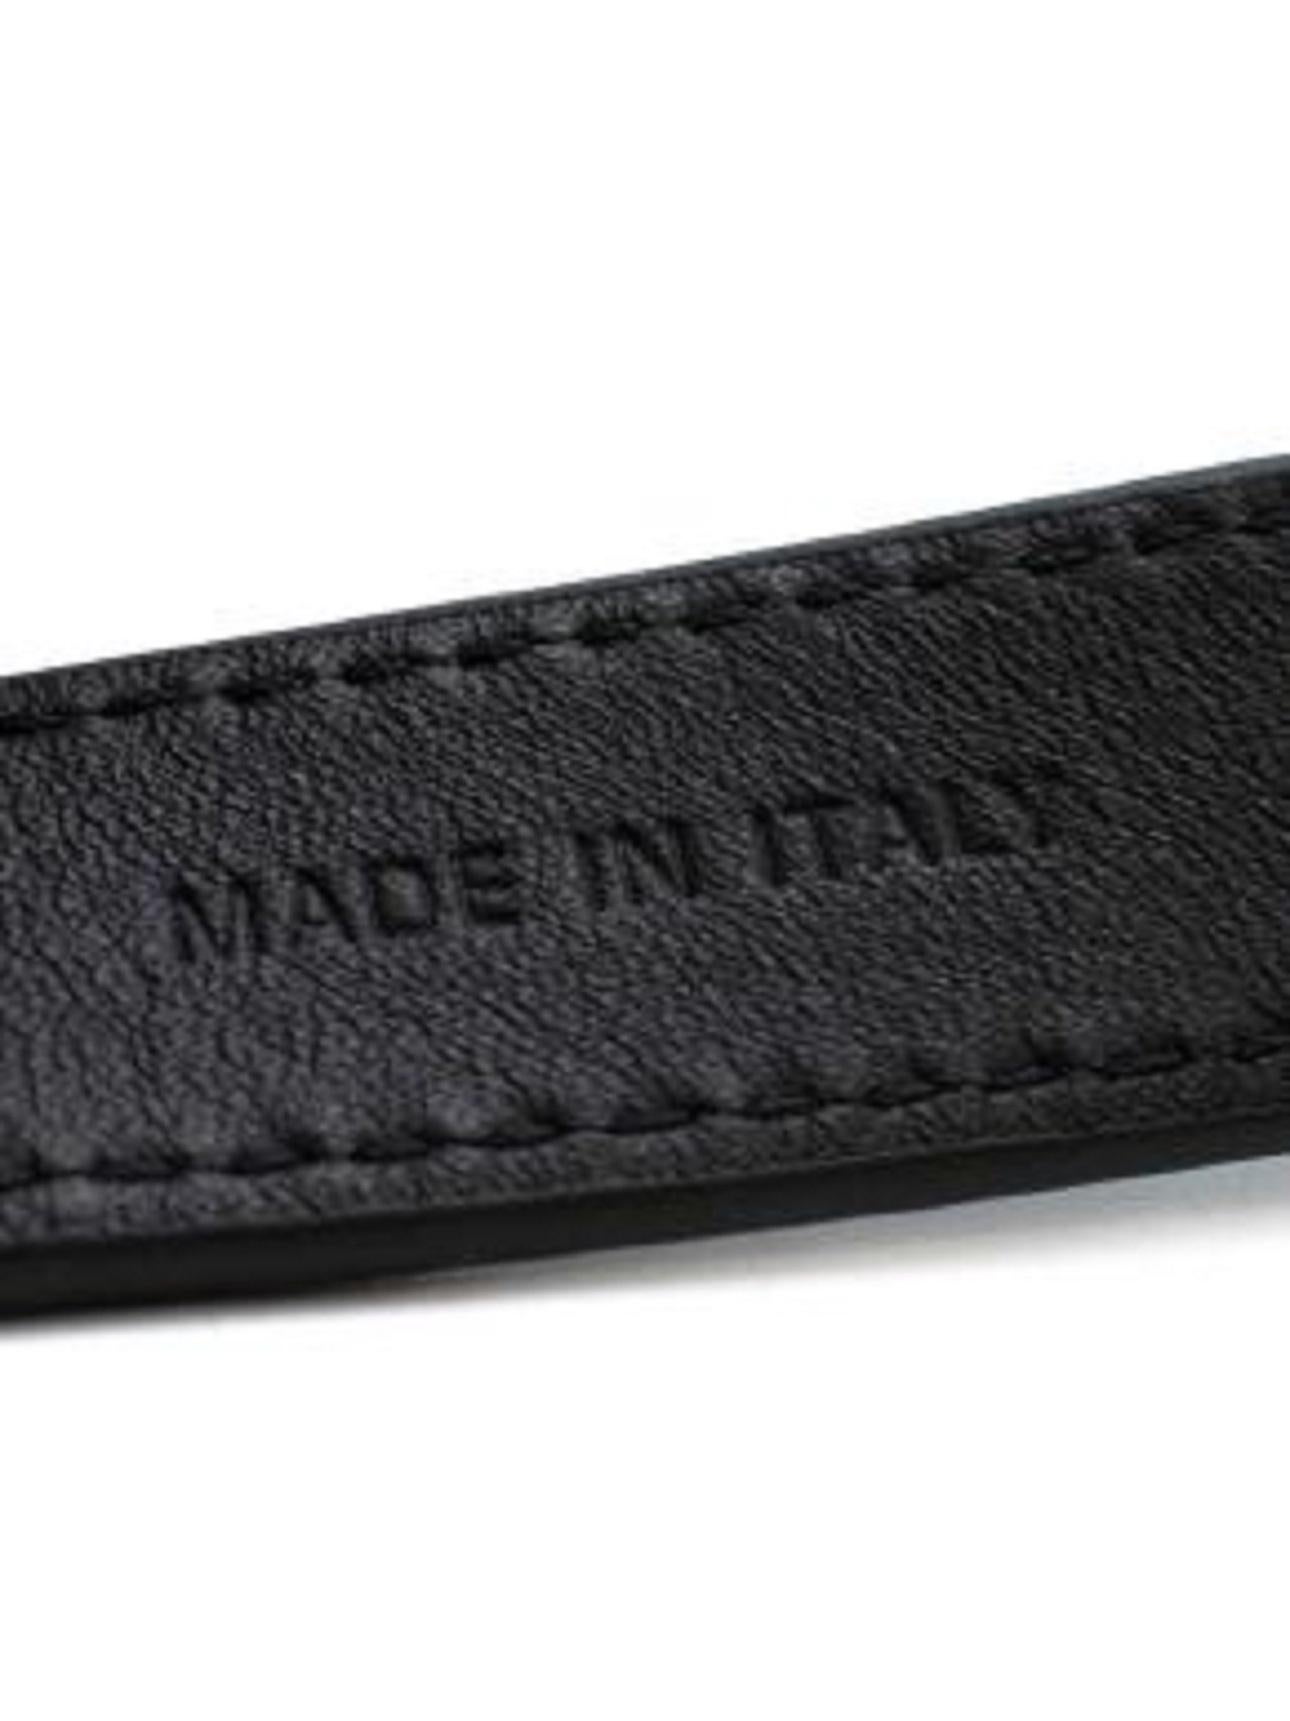 Dior Black Leather Montaigne Belt - Size 70 For Sale 6